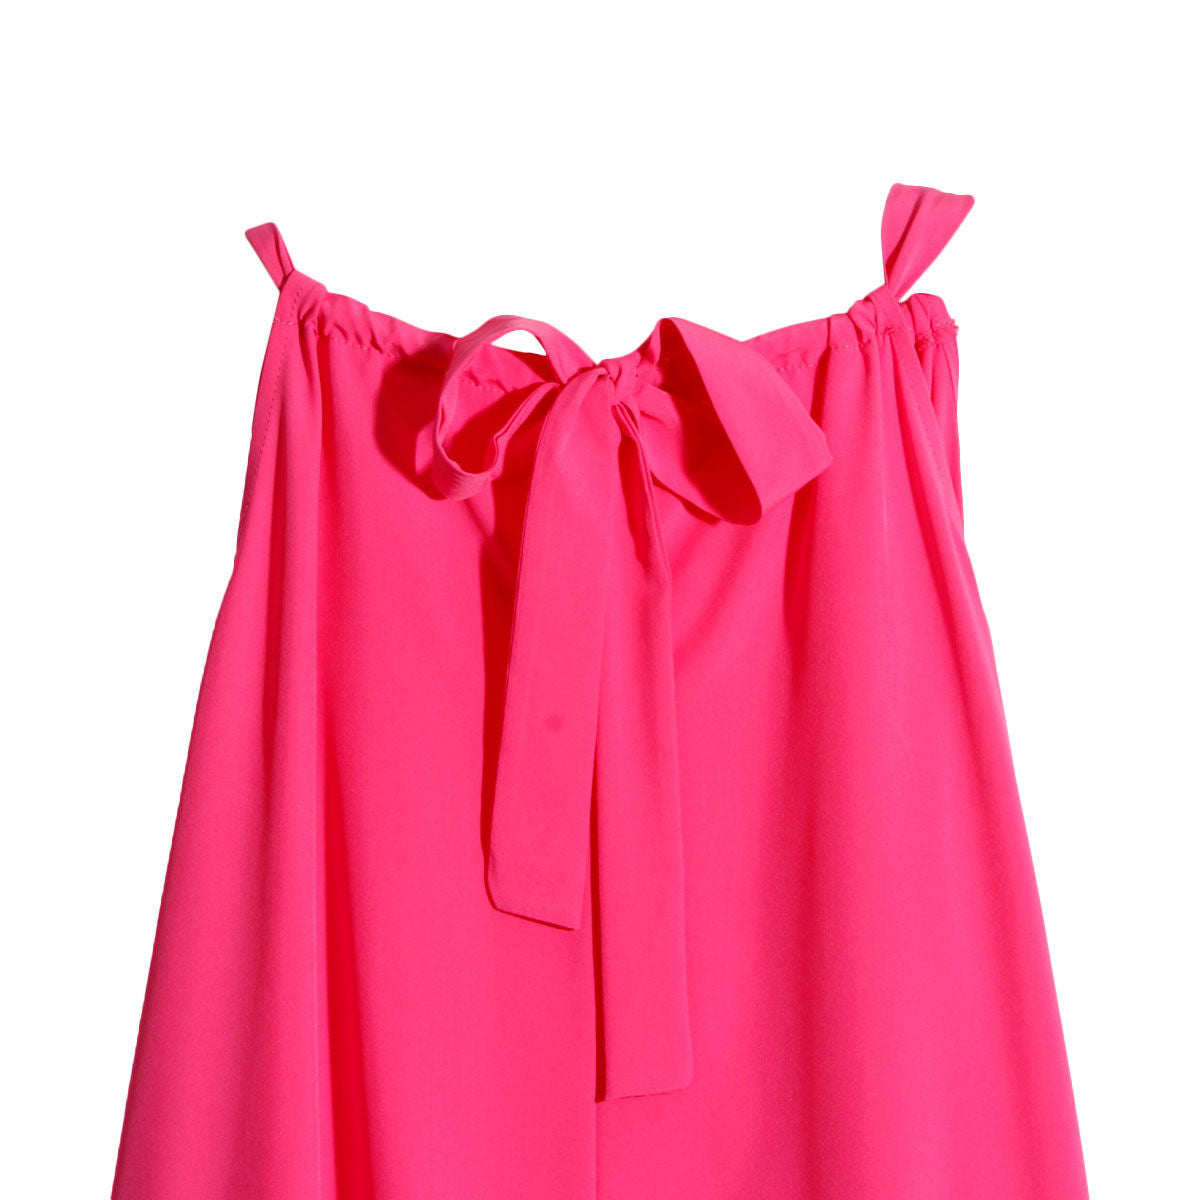 1XL Pink VL Halter Dress